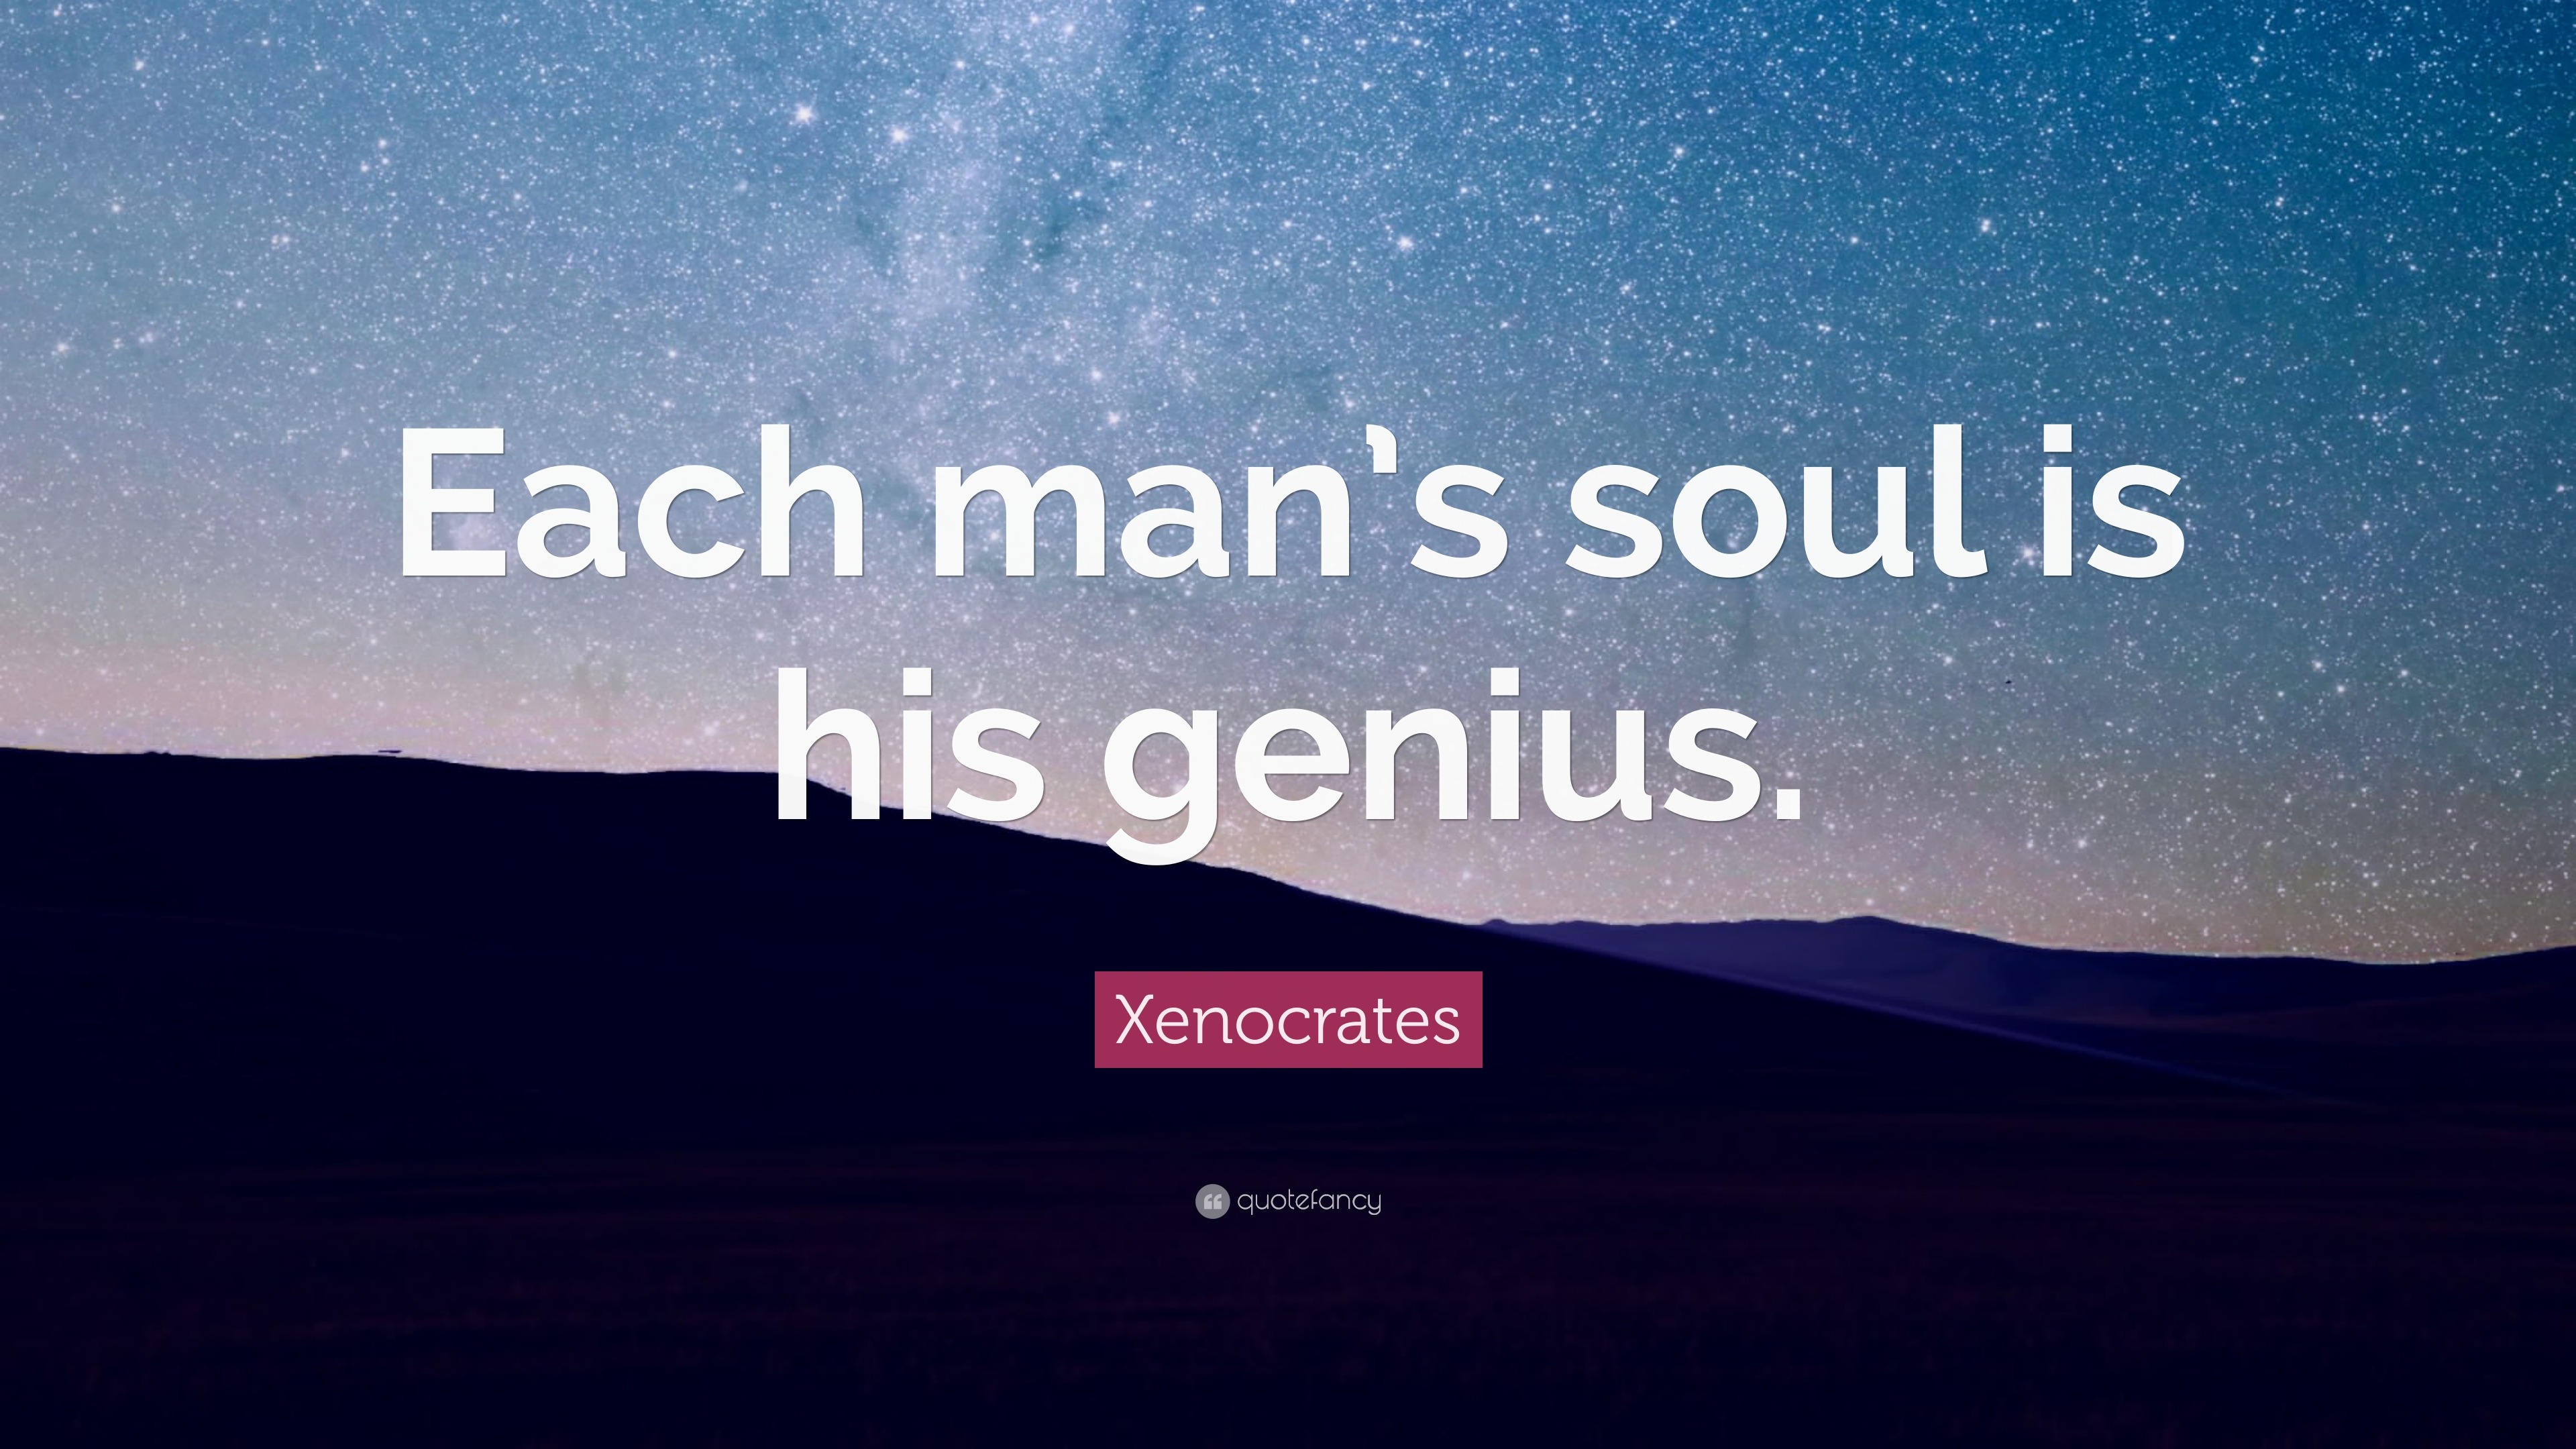 Xenocrates Quote: “Each man’s soul is his genius.”